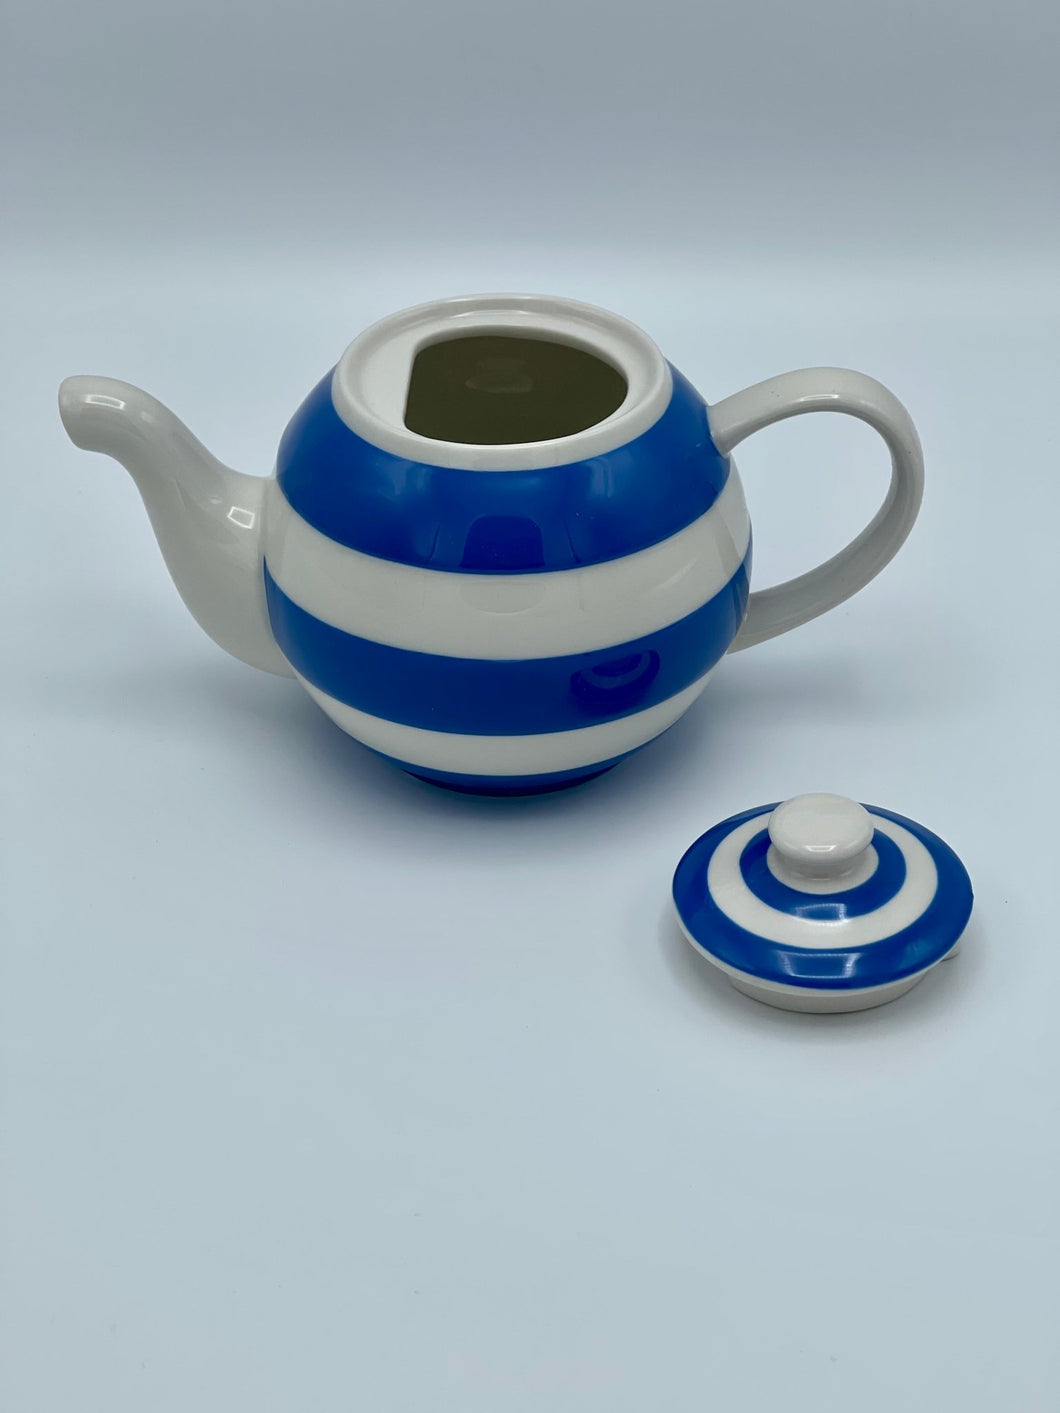 Cornishware Small Betty Teapot (18oz) by T.G. Green